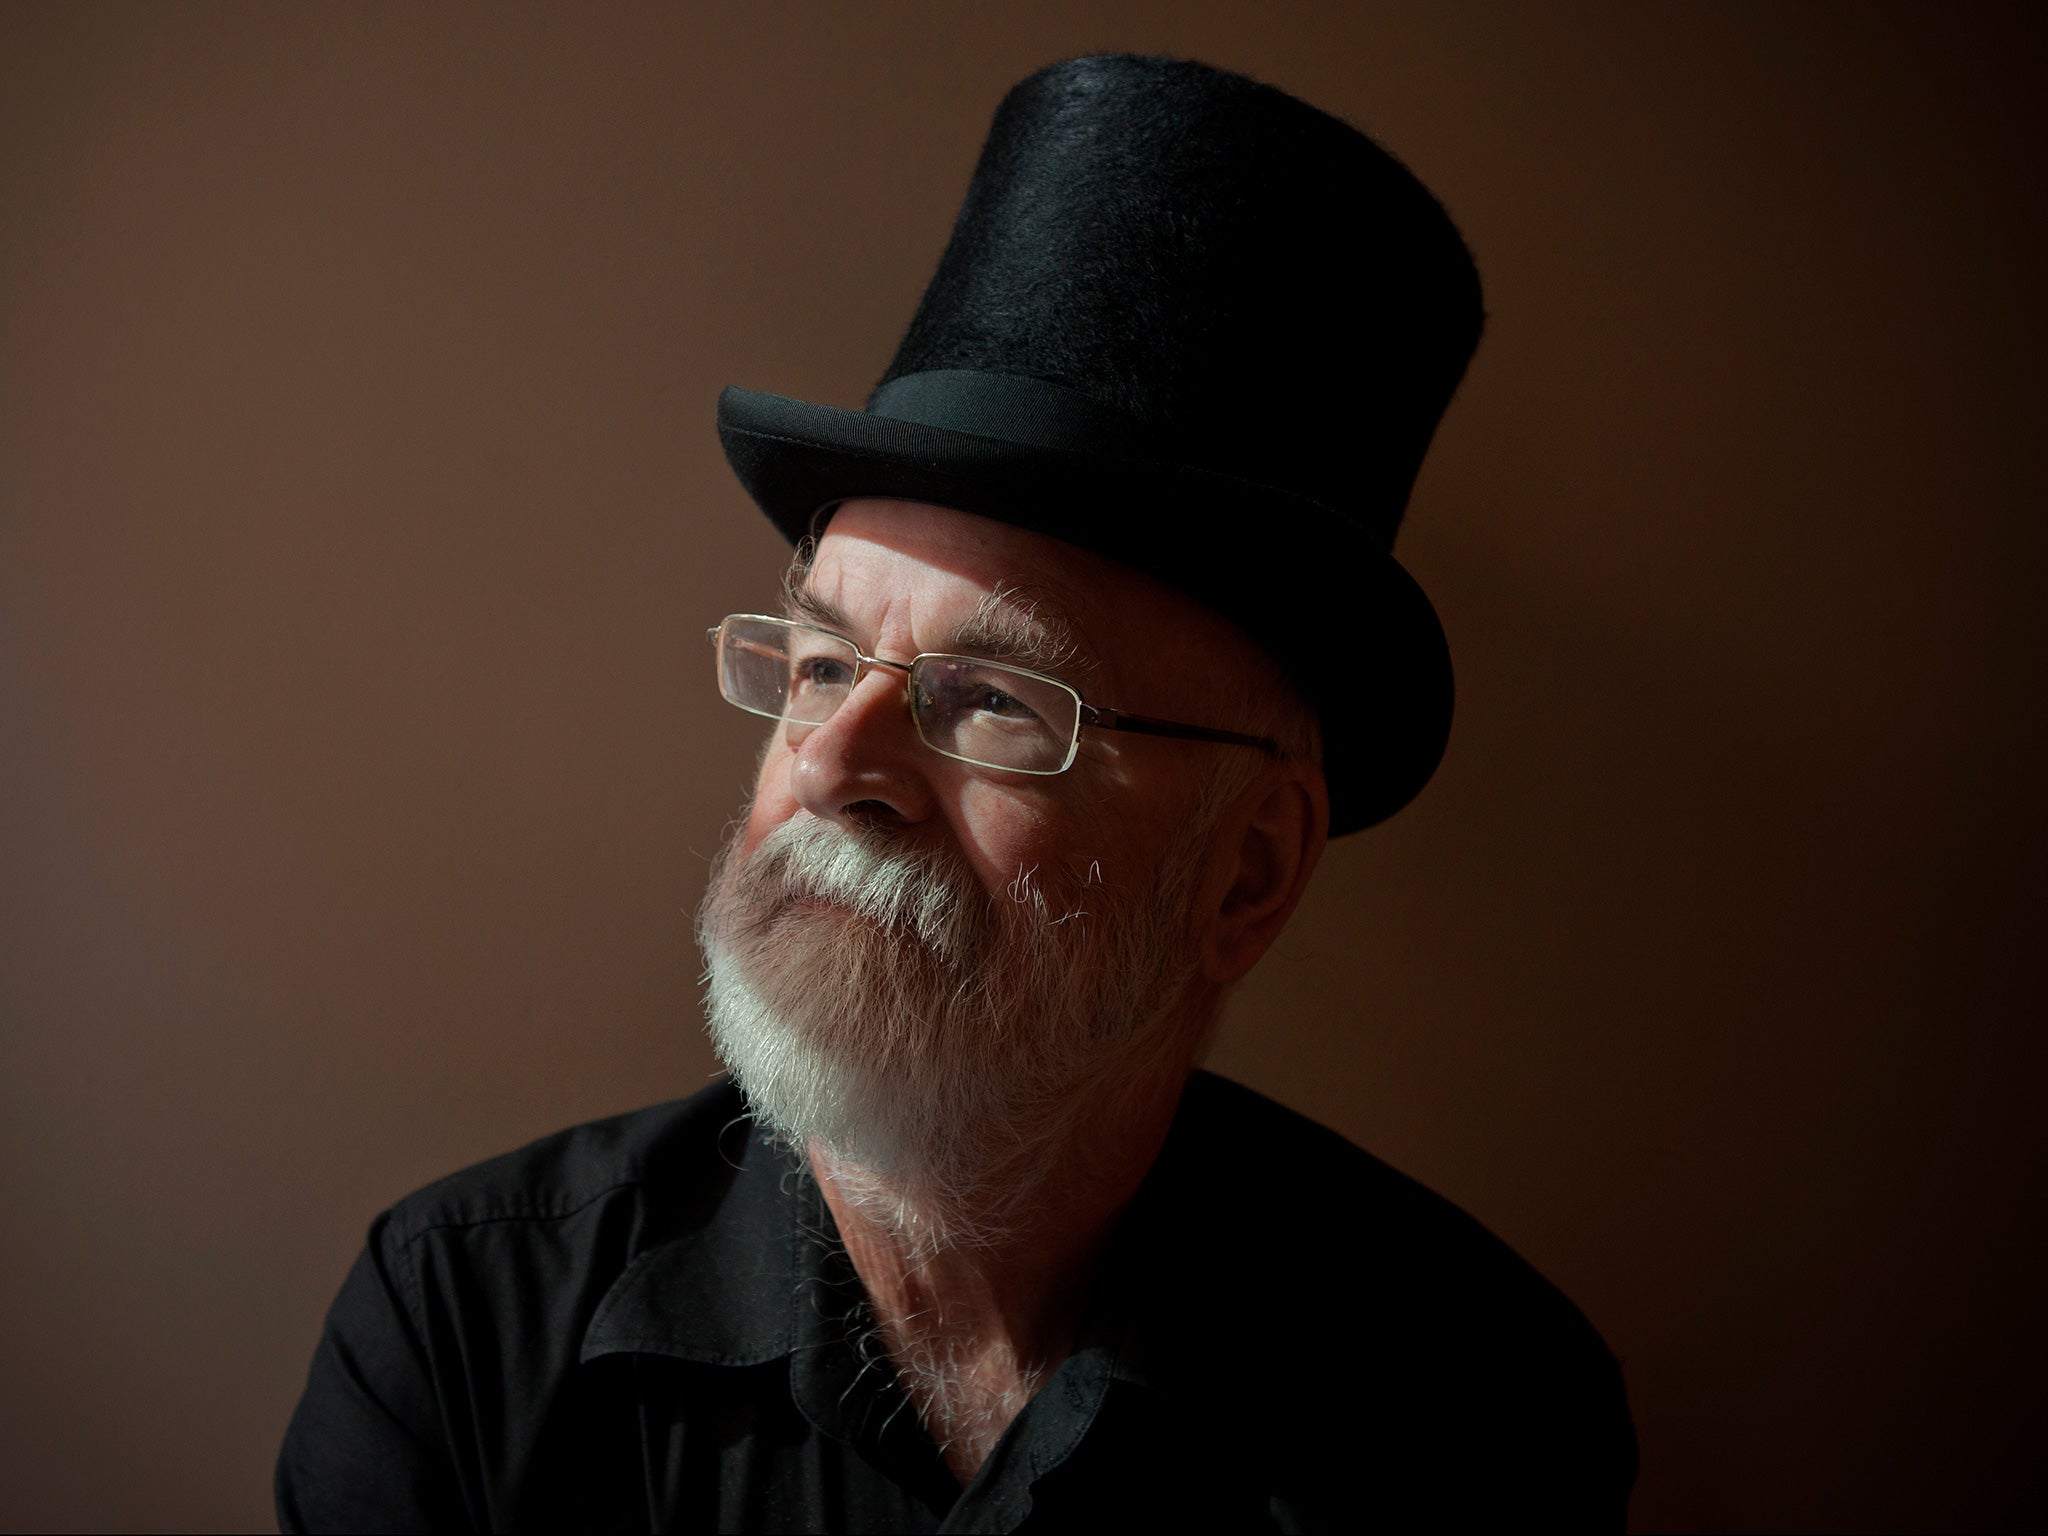 Terry Pratchett, creator of the Discworld series of books